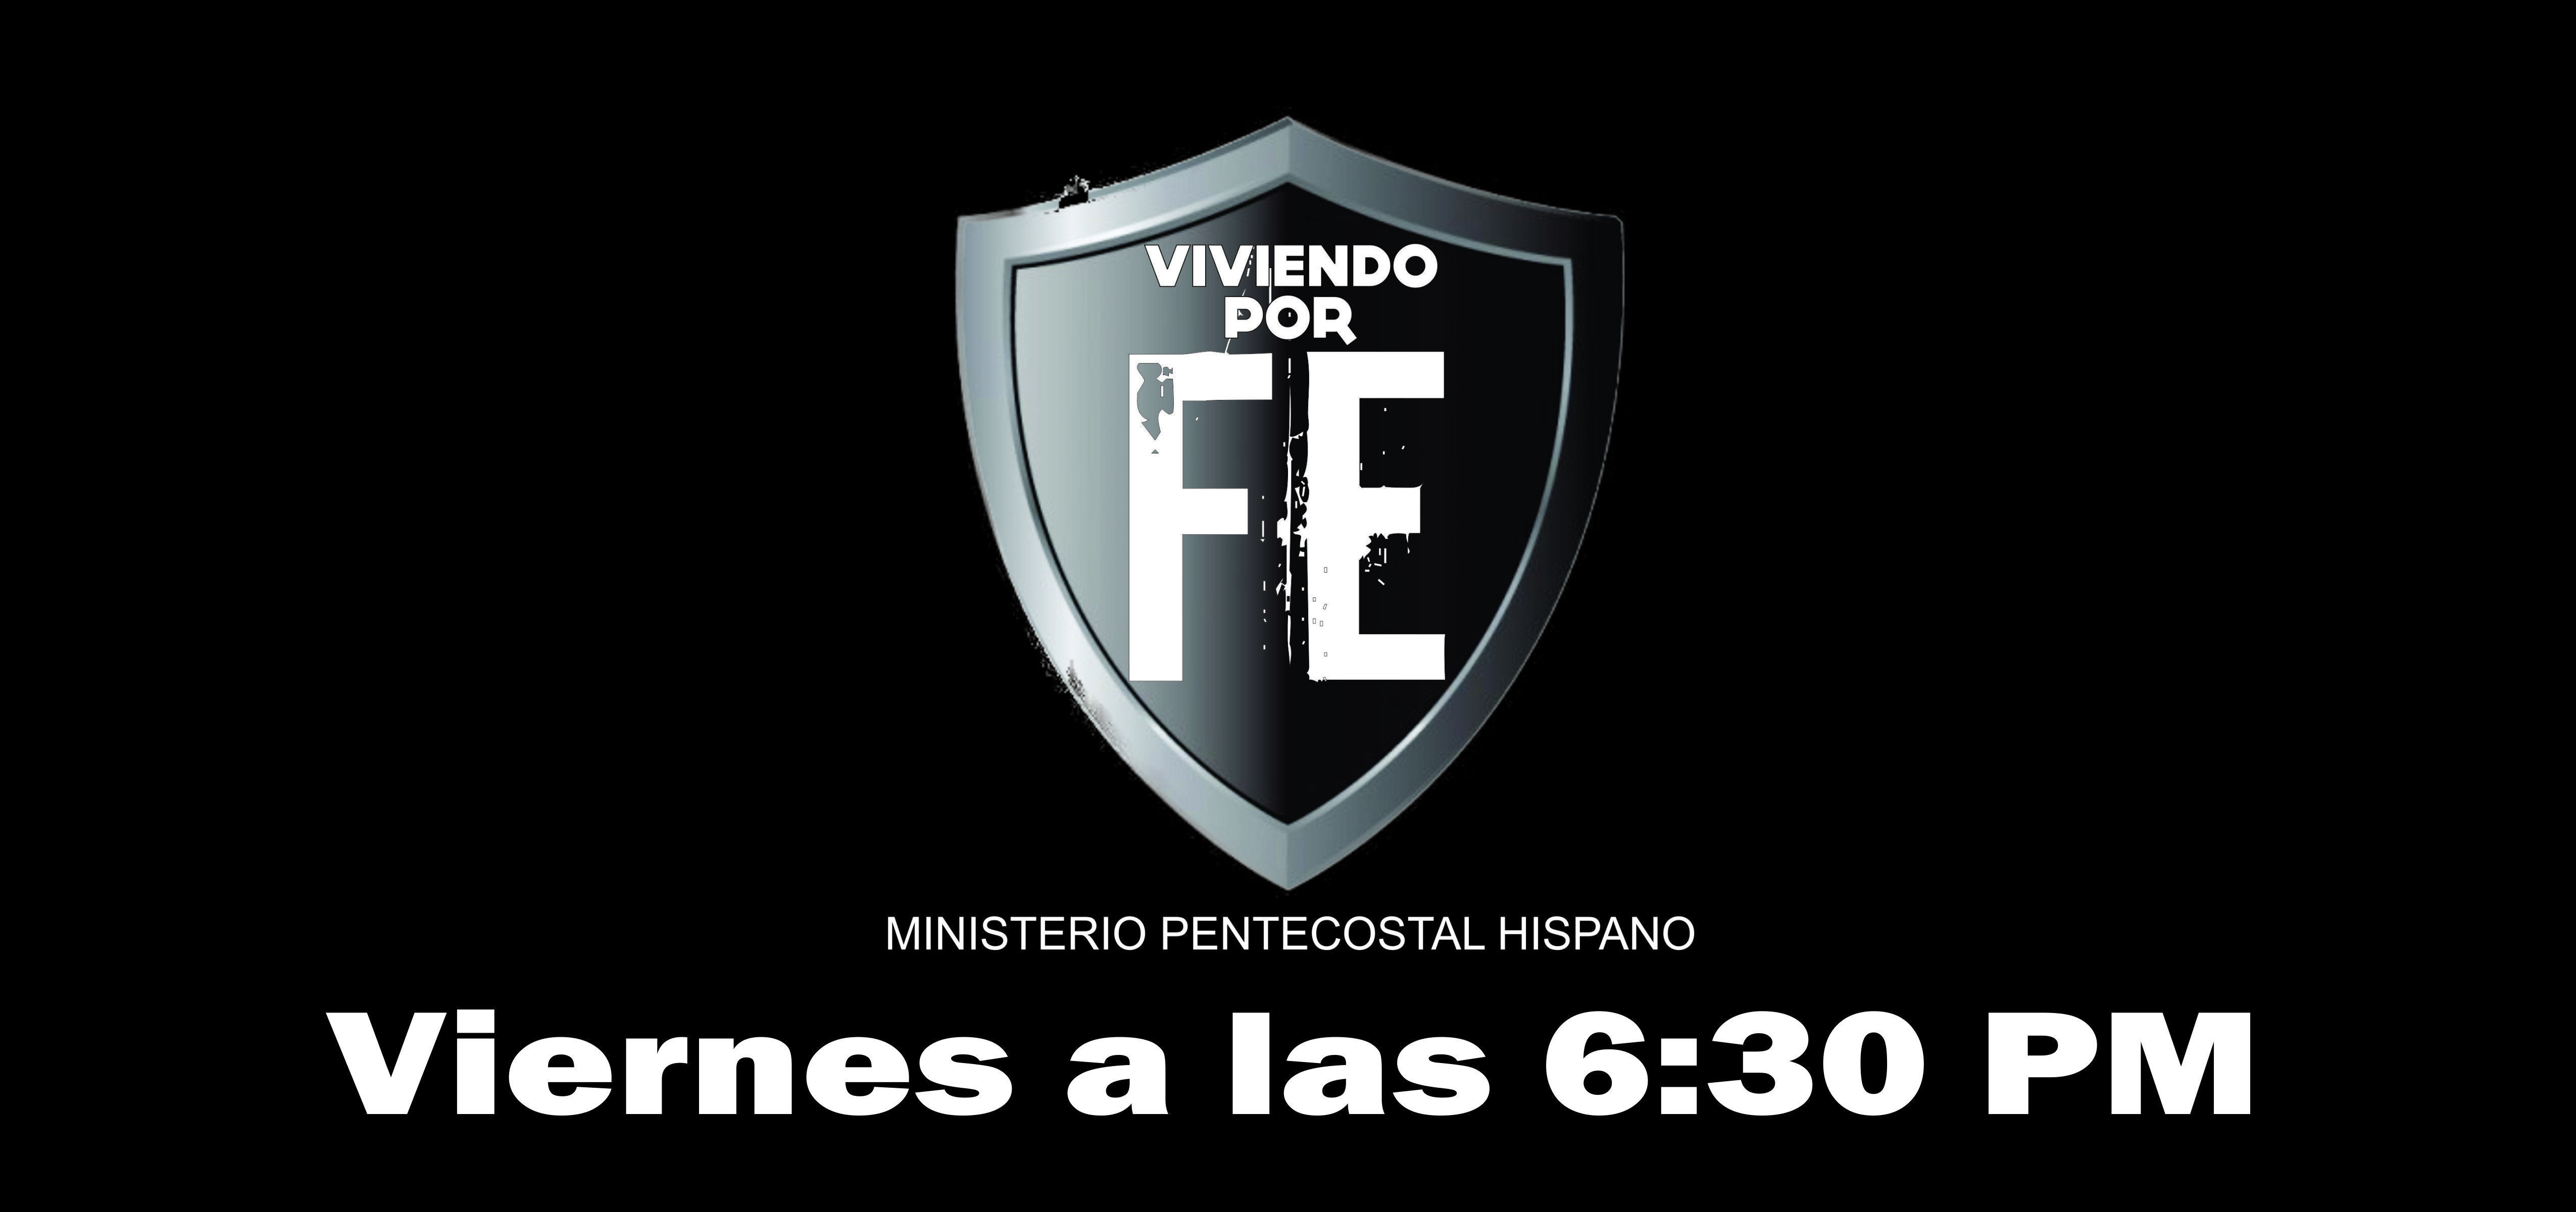 Hispanic Logo - Hispanic Logo and Service time -